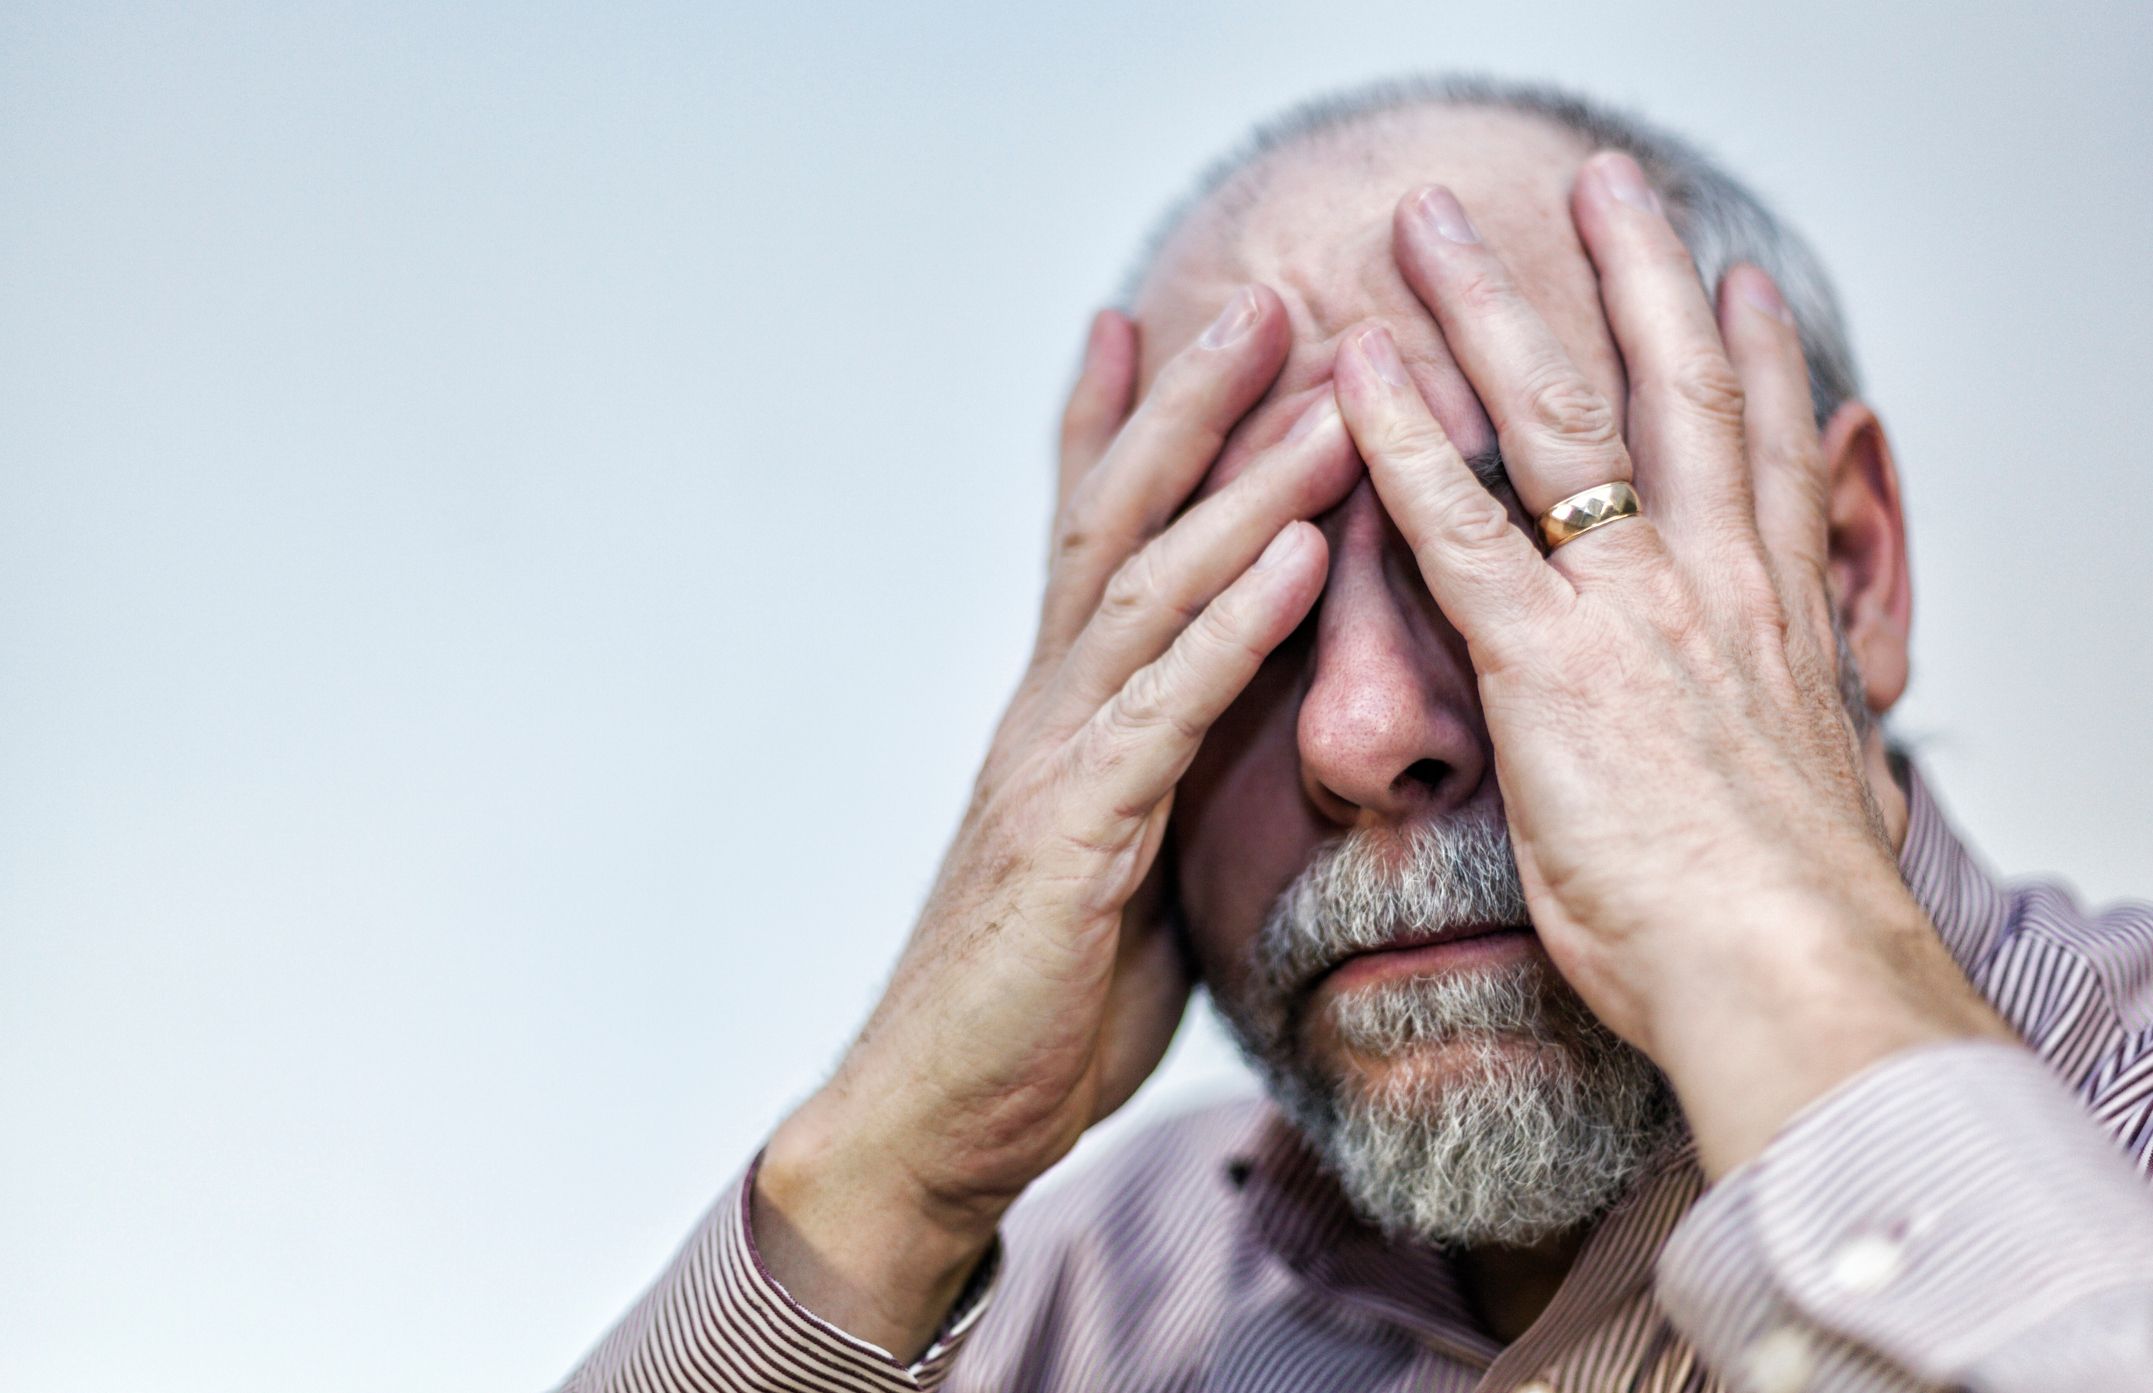 An upset elderly man. | Source: Getty Images